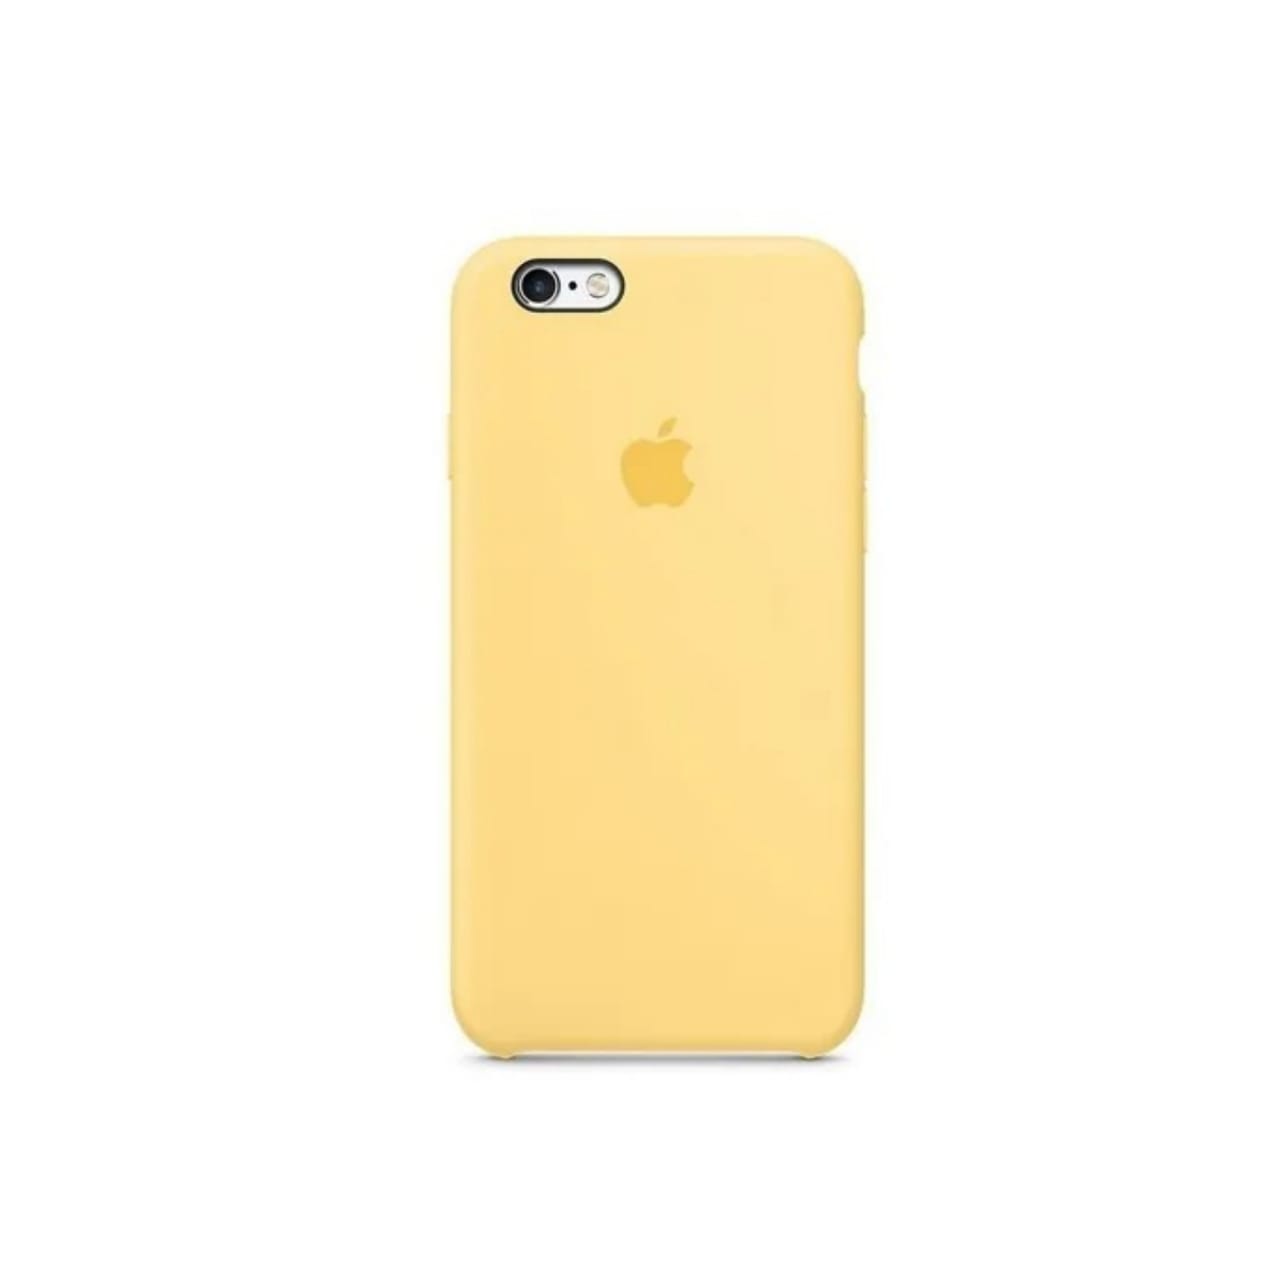 iPhone 8 Plus - QuieroMac (Reacondicionado, Refurbish, Certificado) –